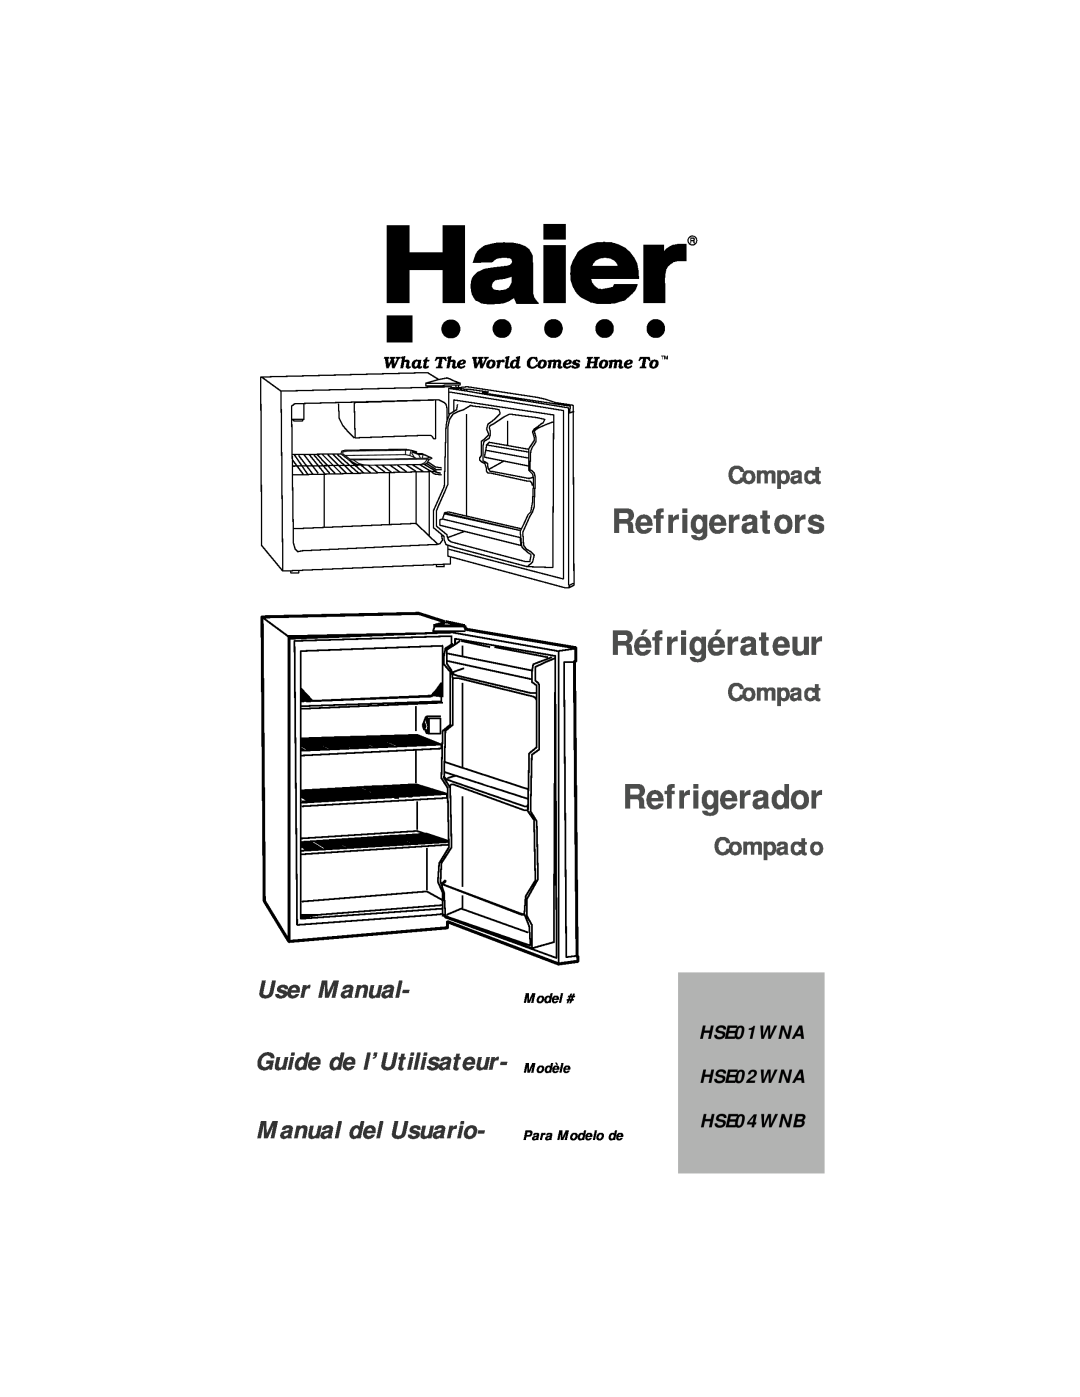 Haier HSE01WNA user manual Model # Modèle Para Modelo de, Refrigerators Réfrigérateur, Refrigerador, Compacto 